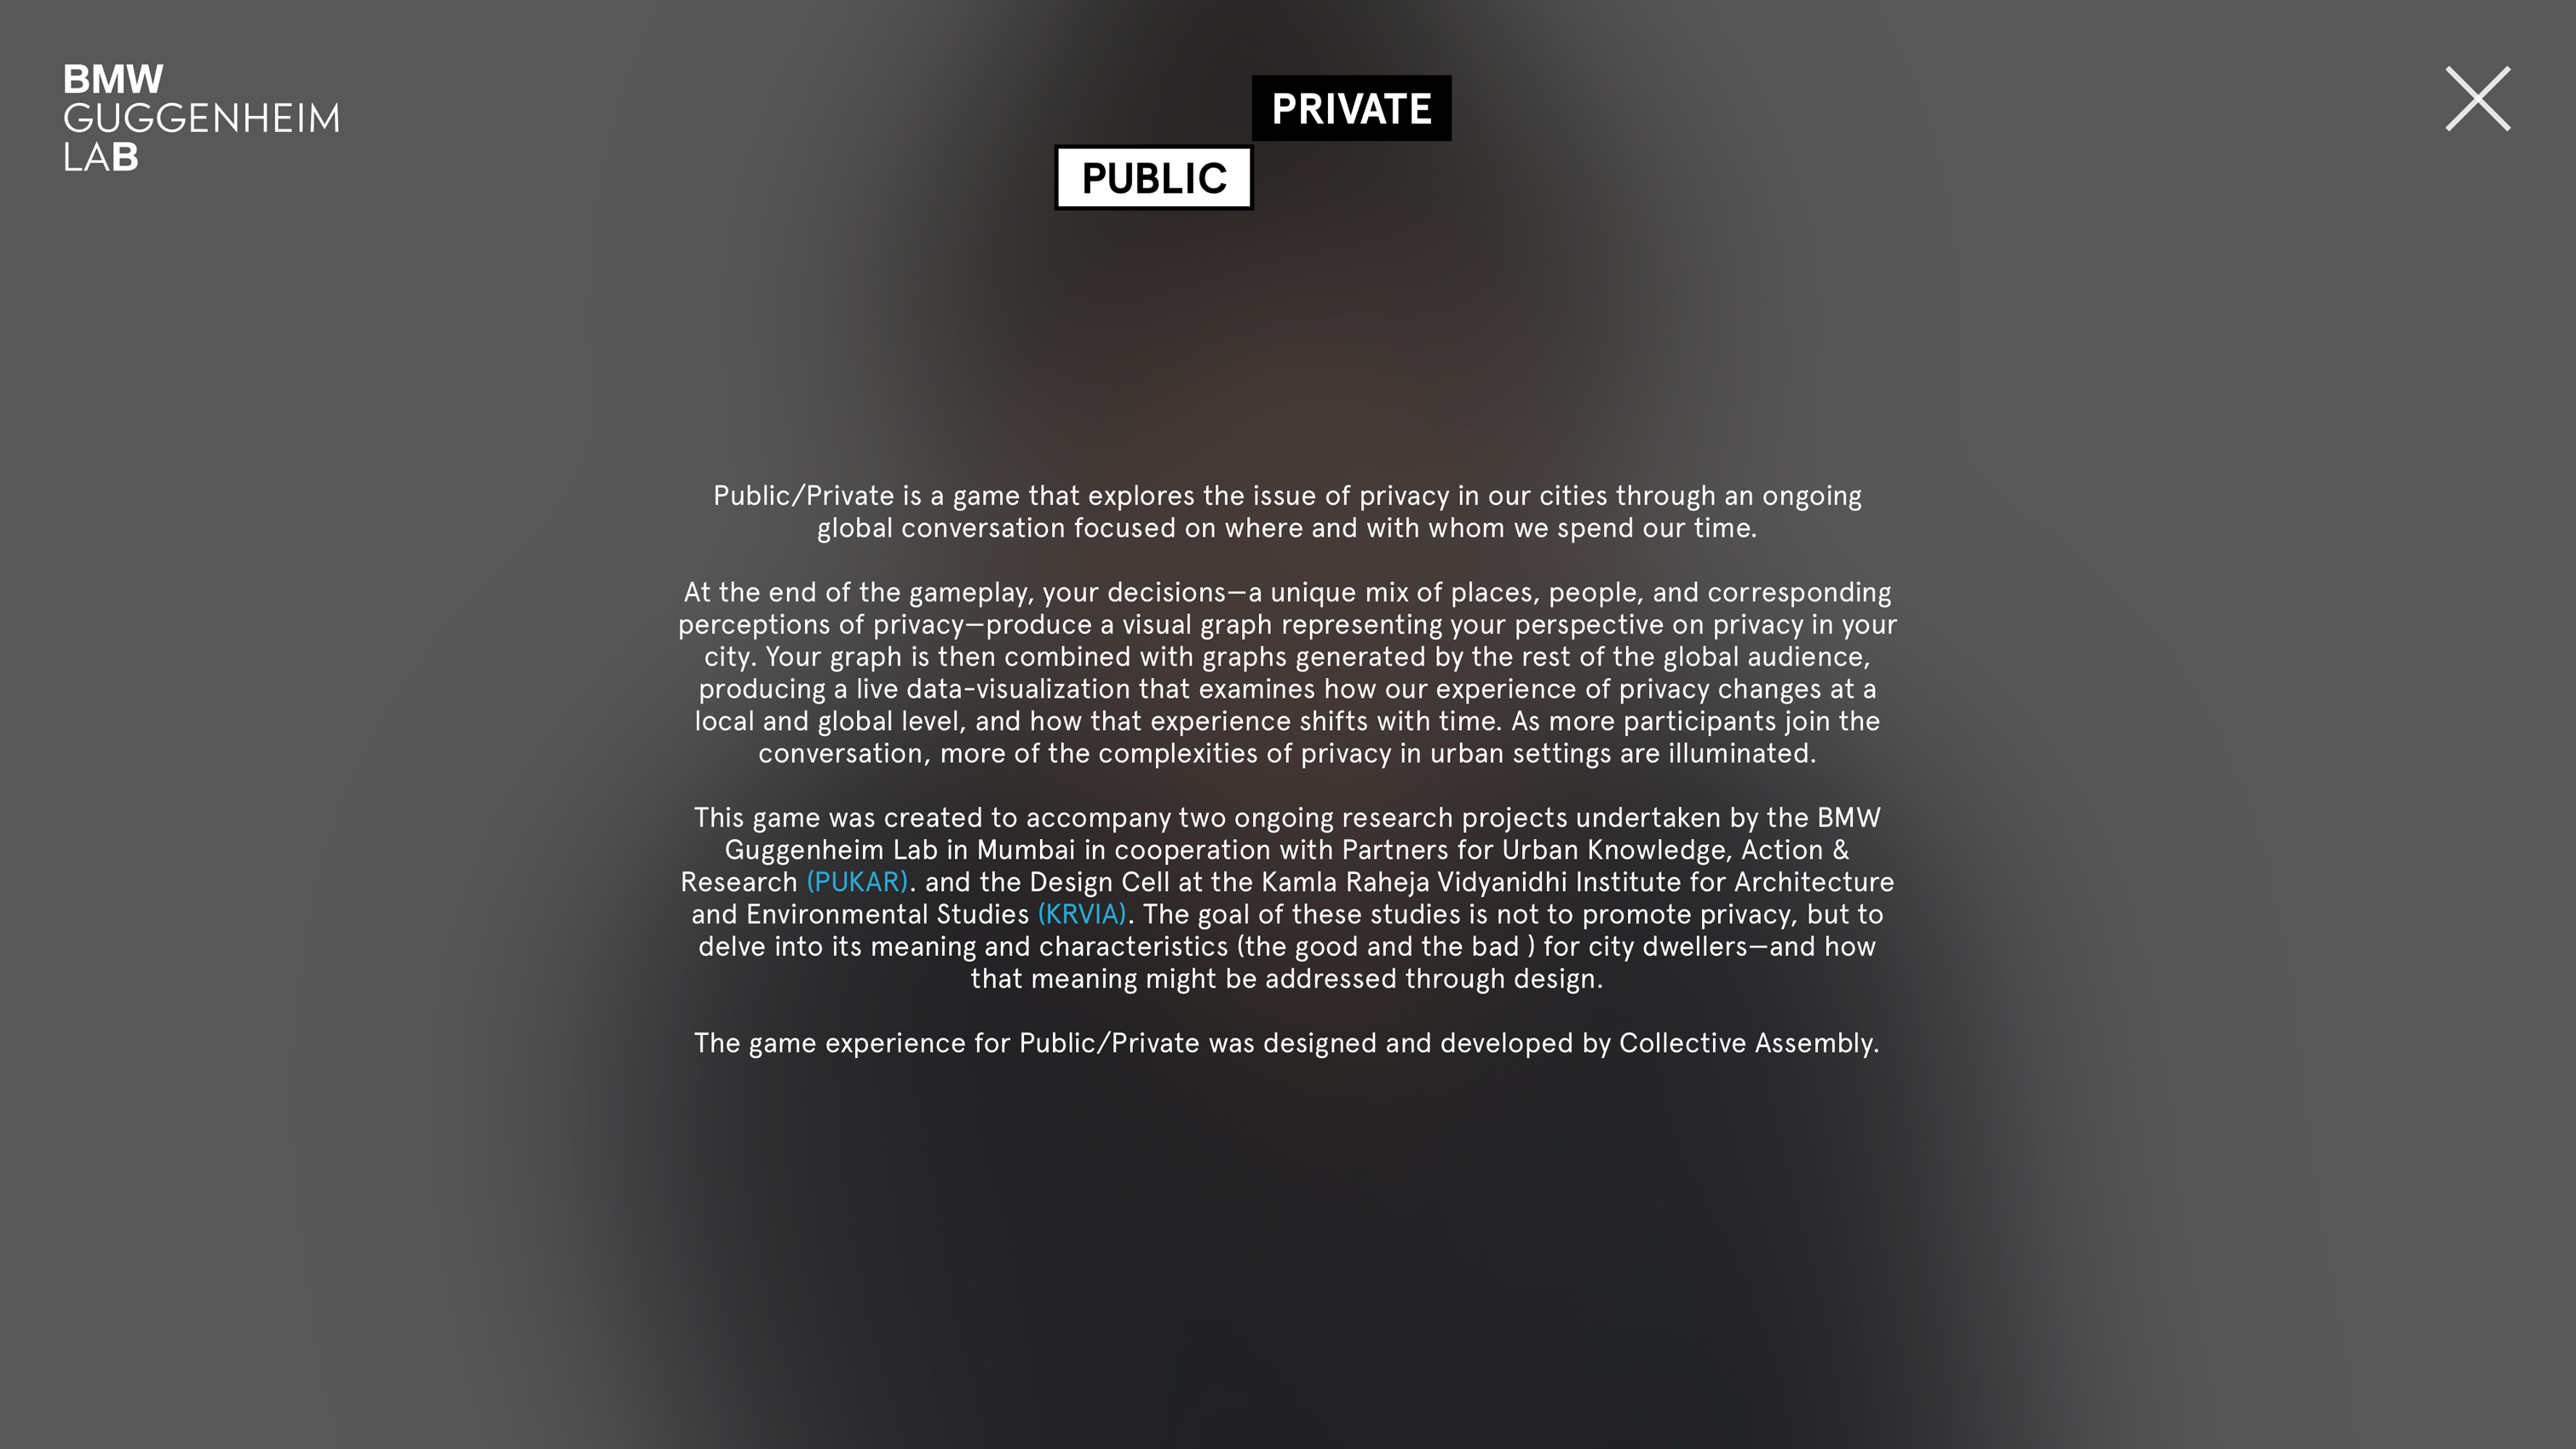 BMW Guggenheim Lab: Public/Private